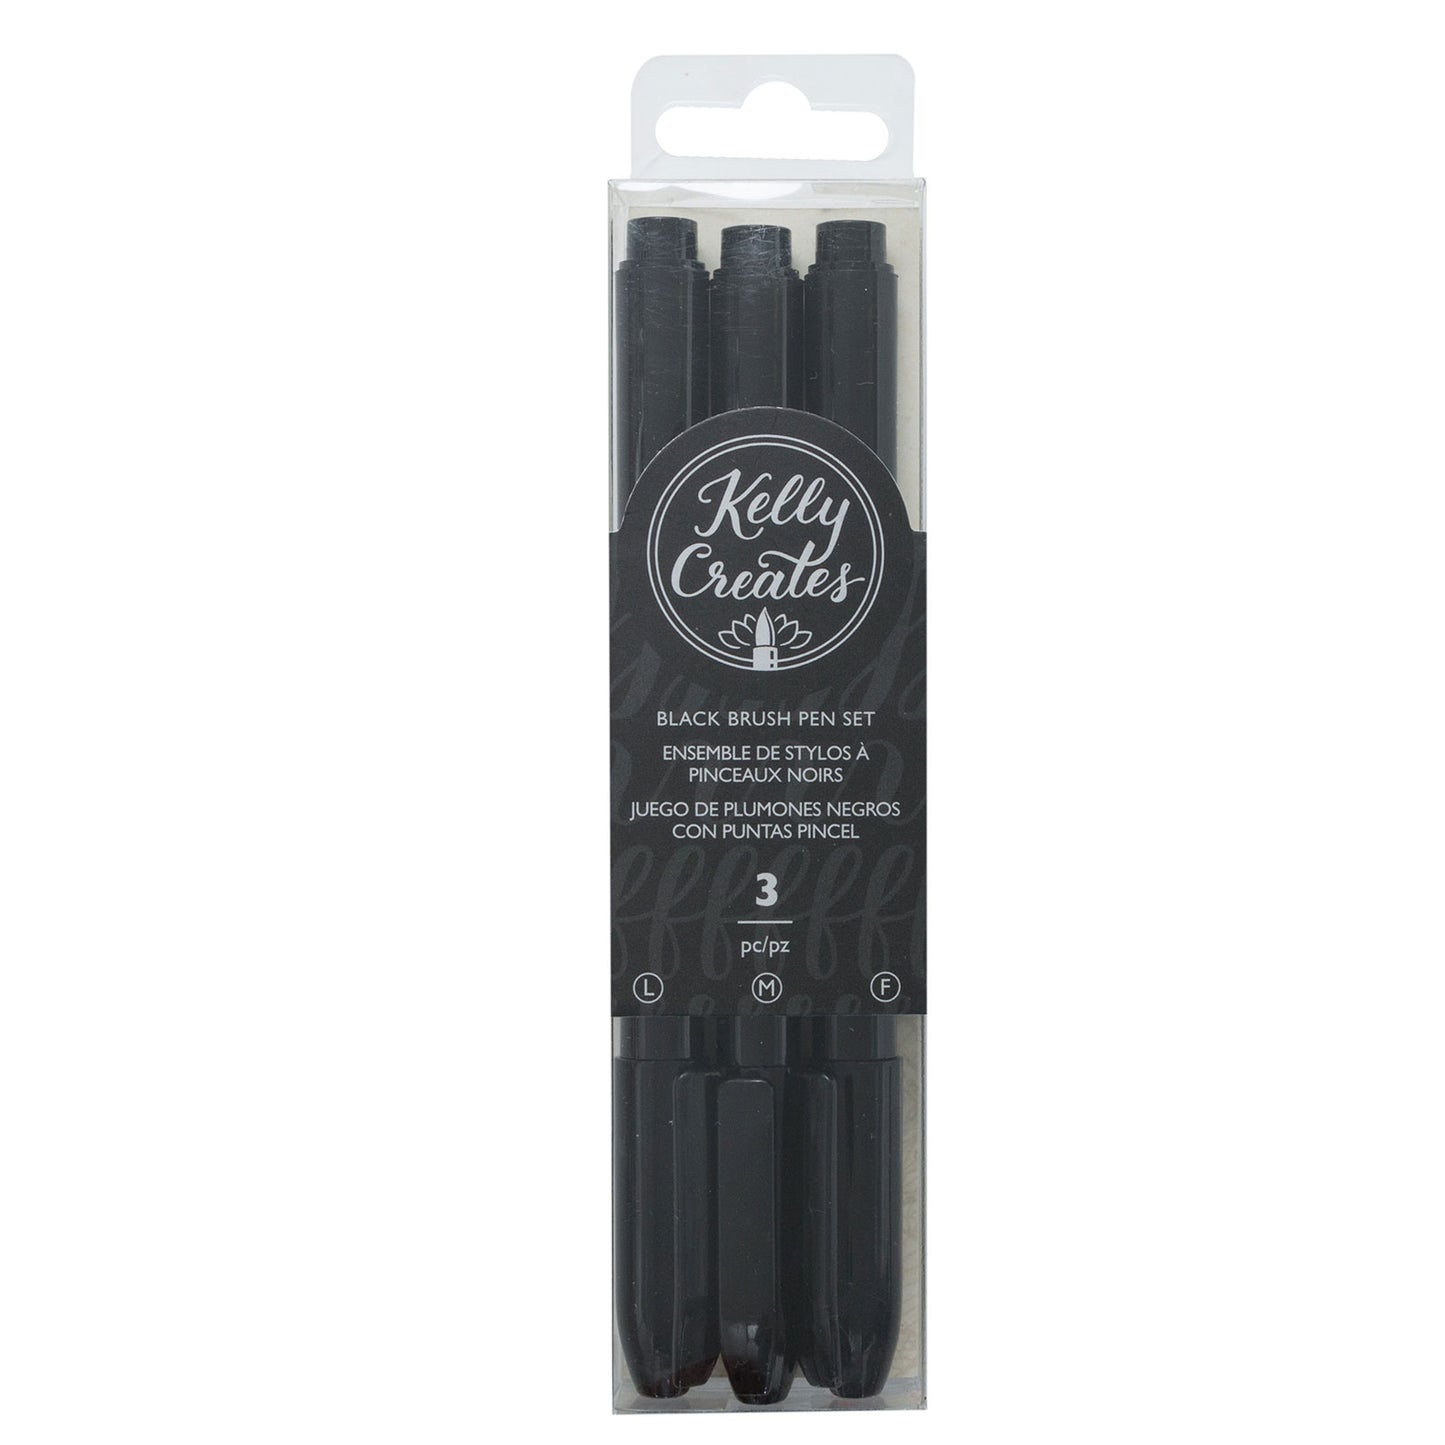 Kelly Creates Black Brush Pen Set